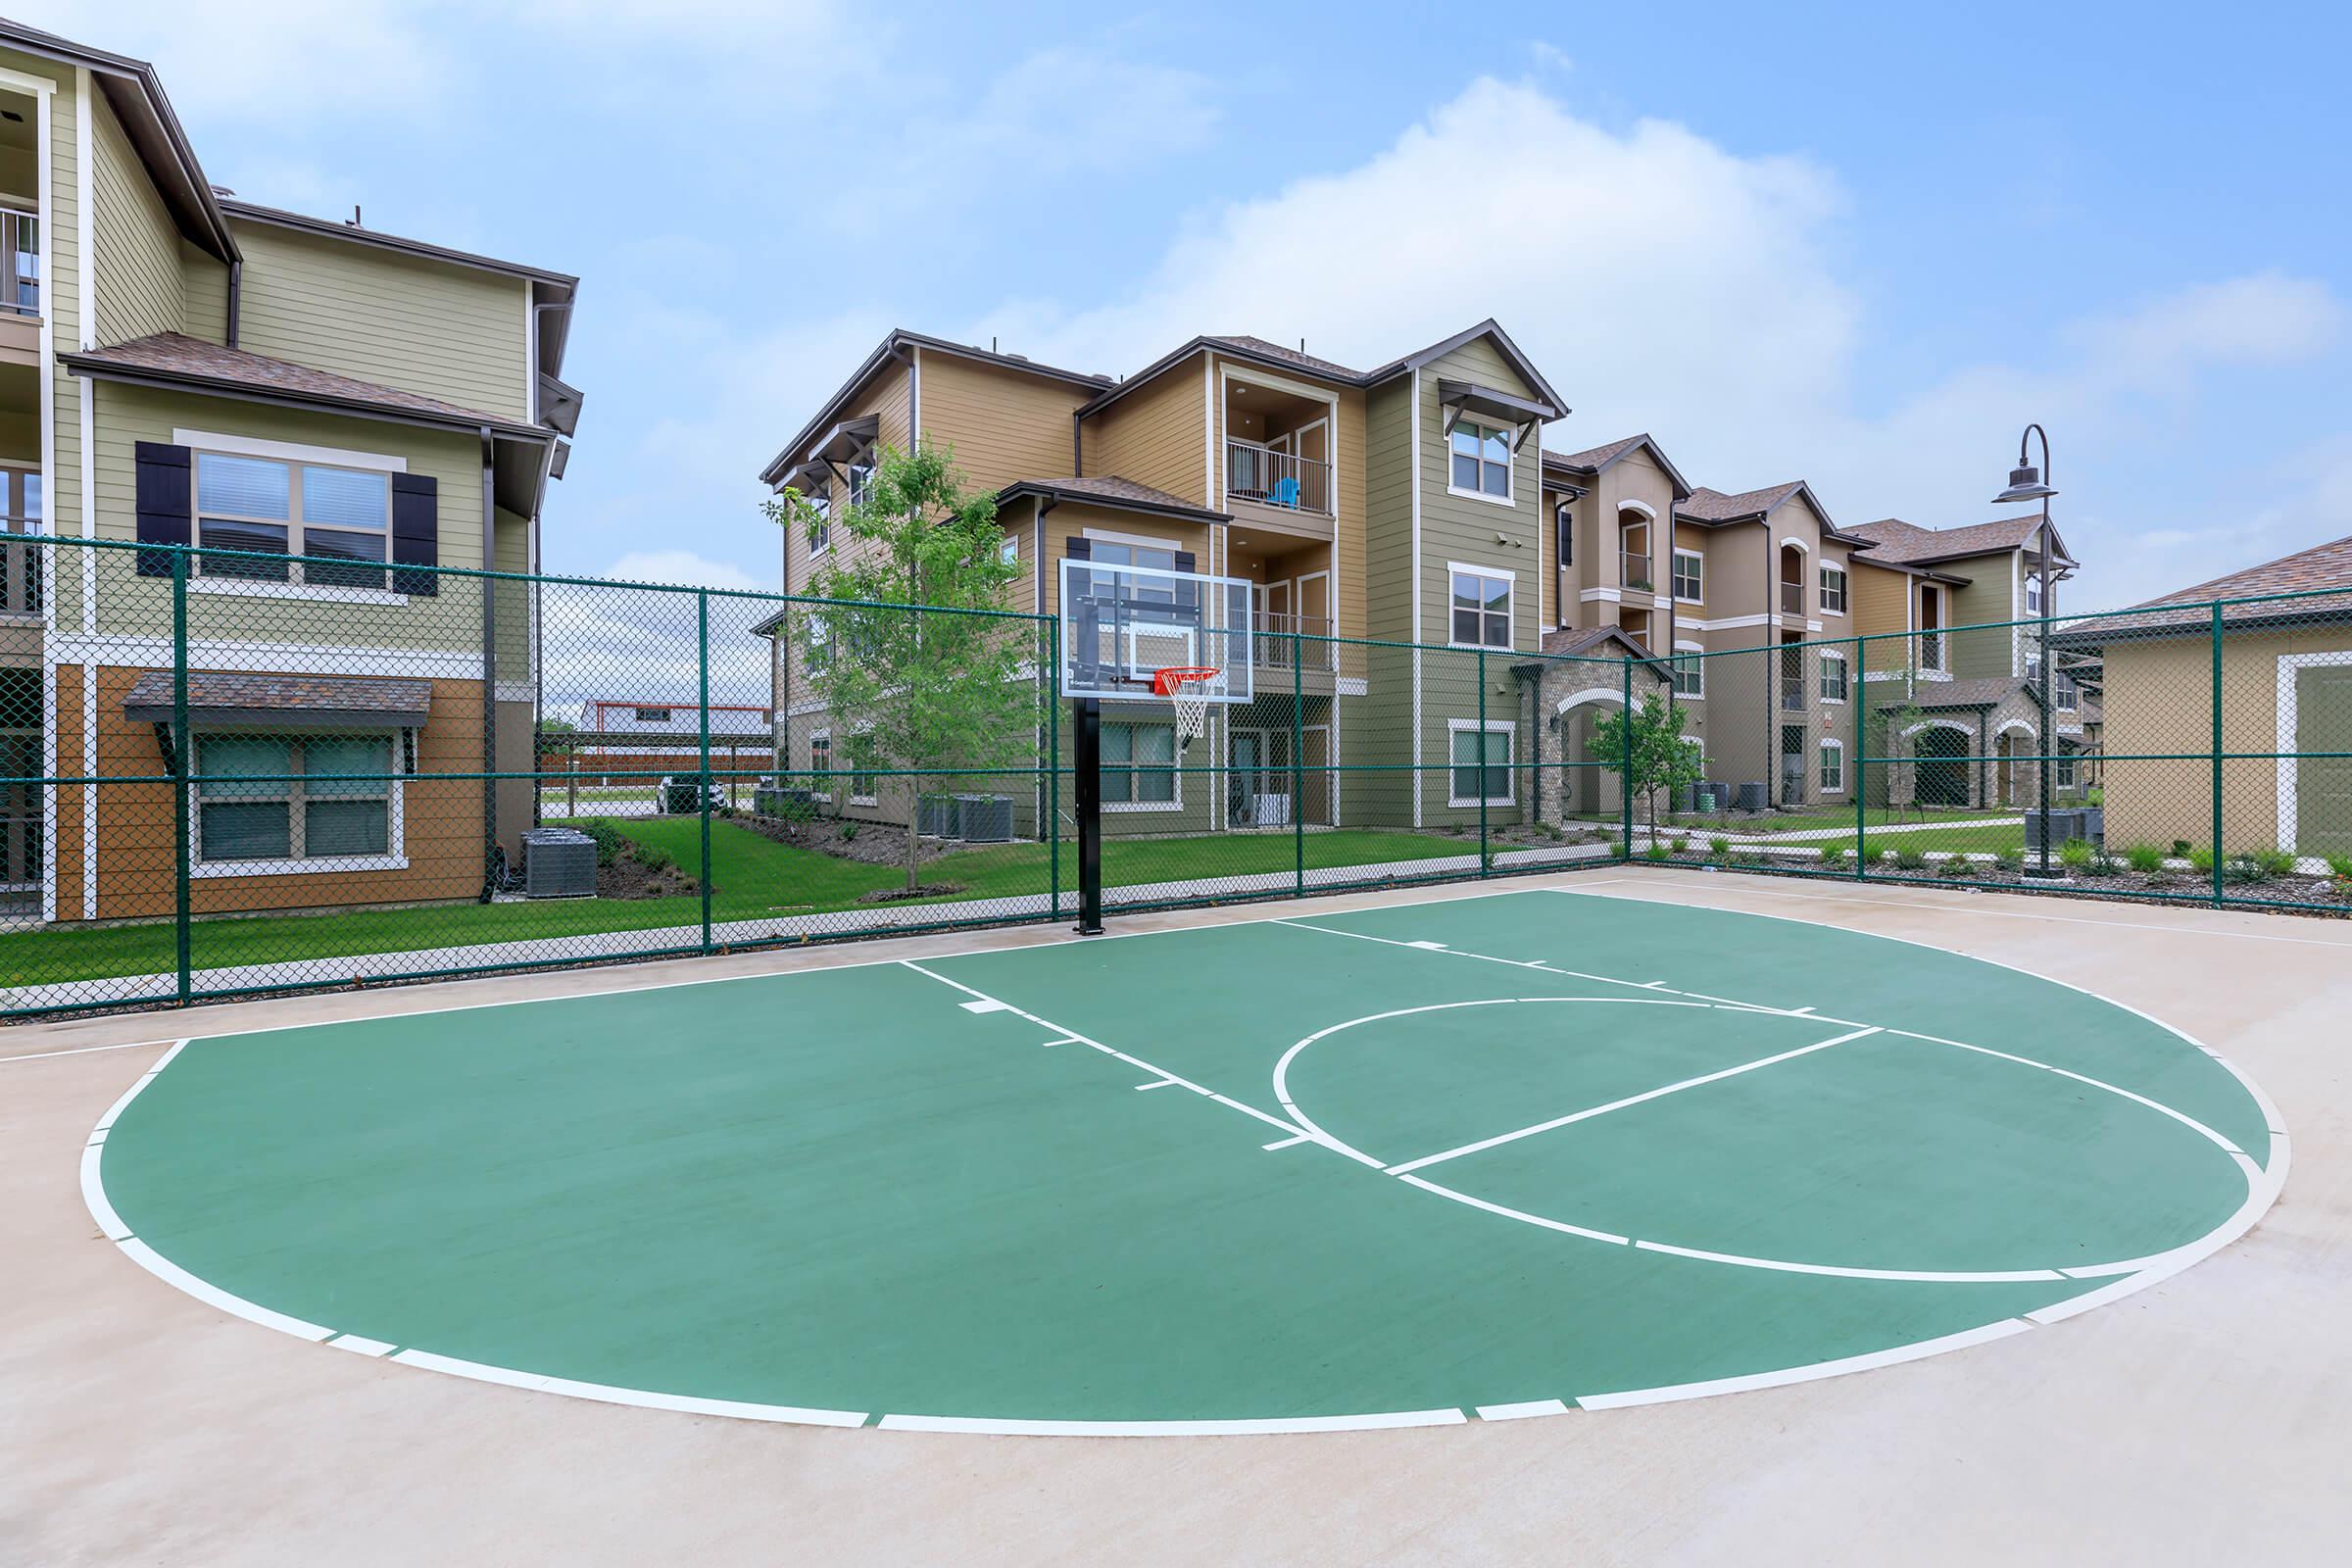 a house on a basketball court